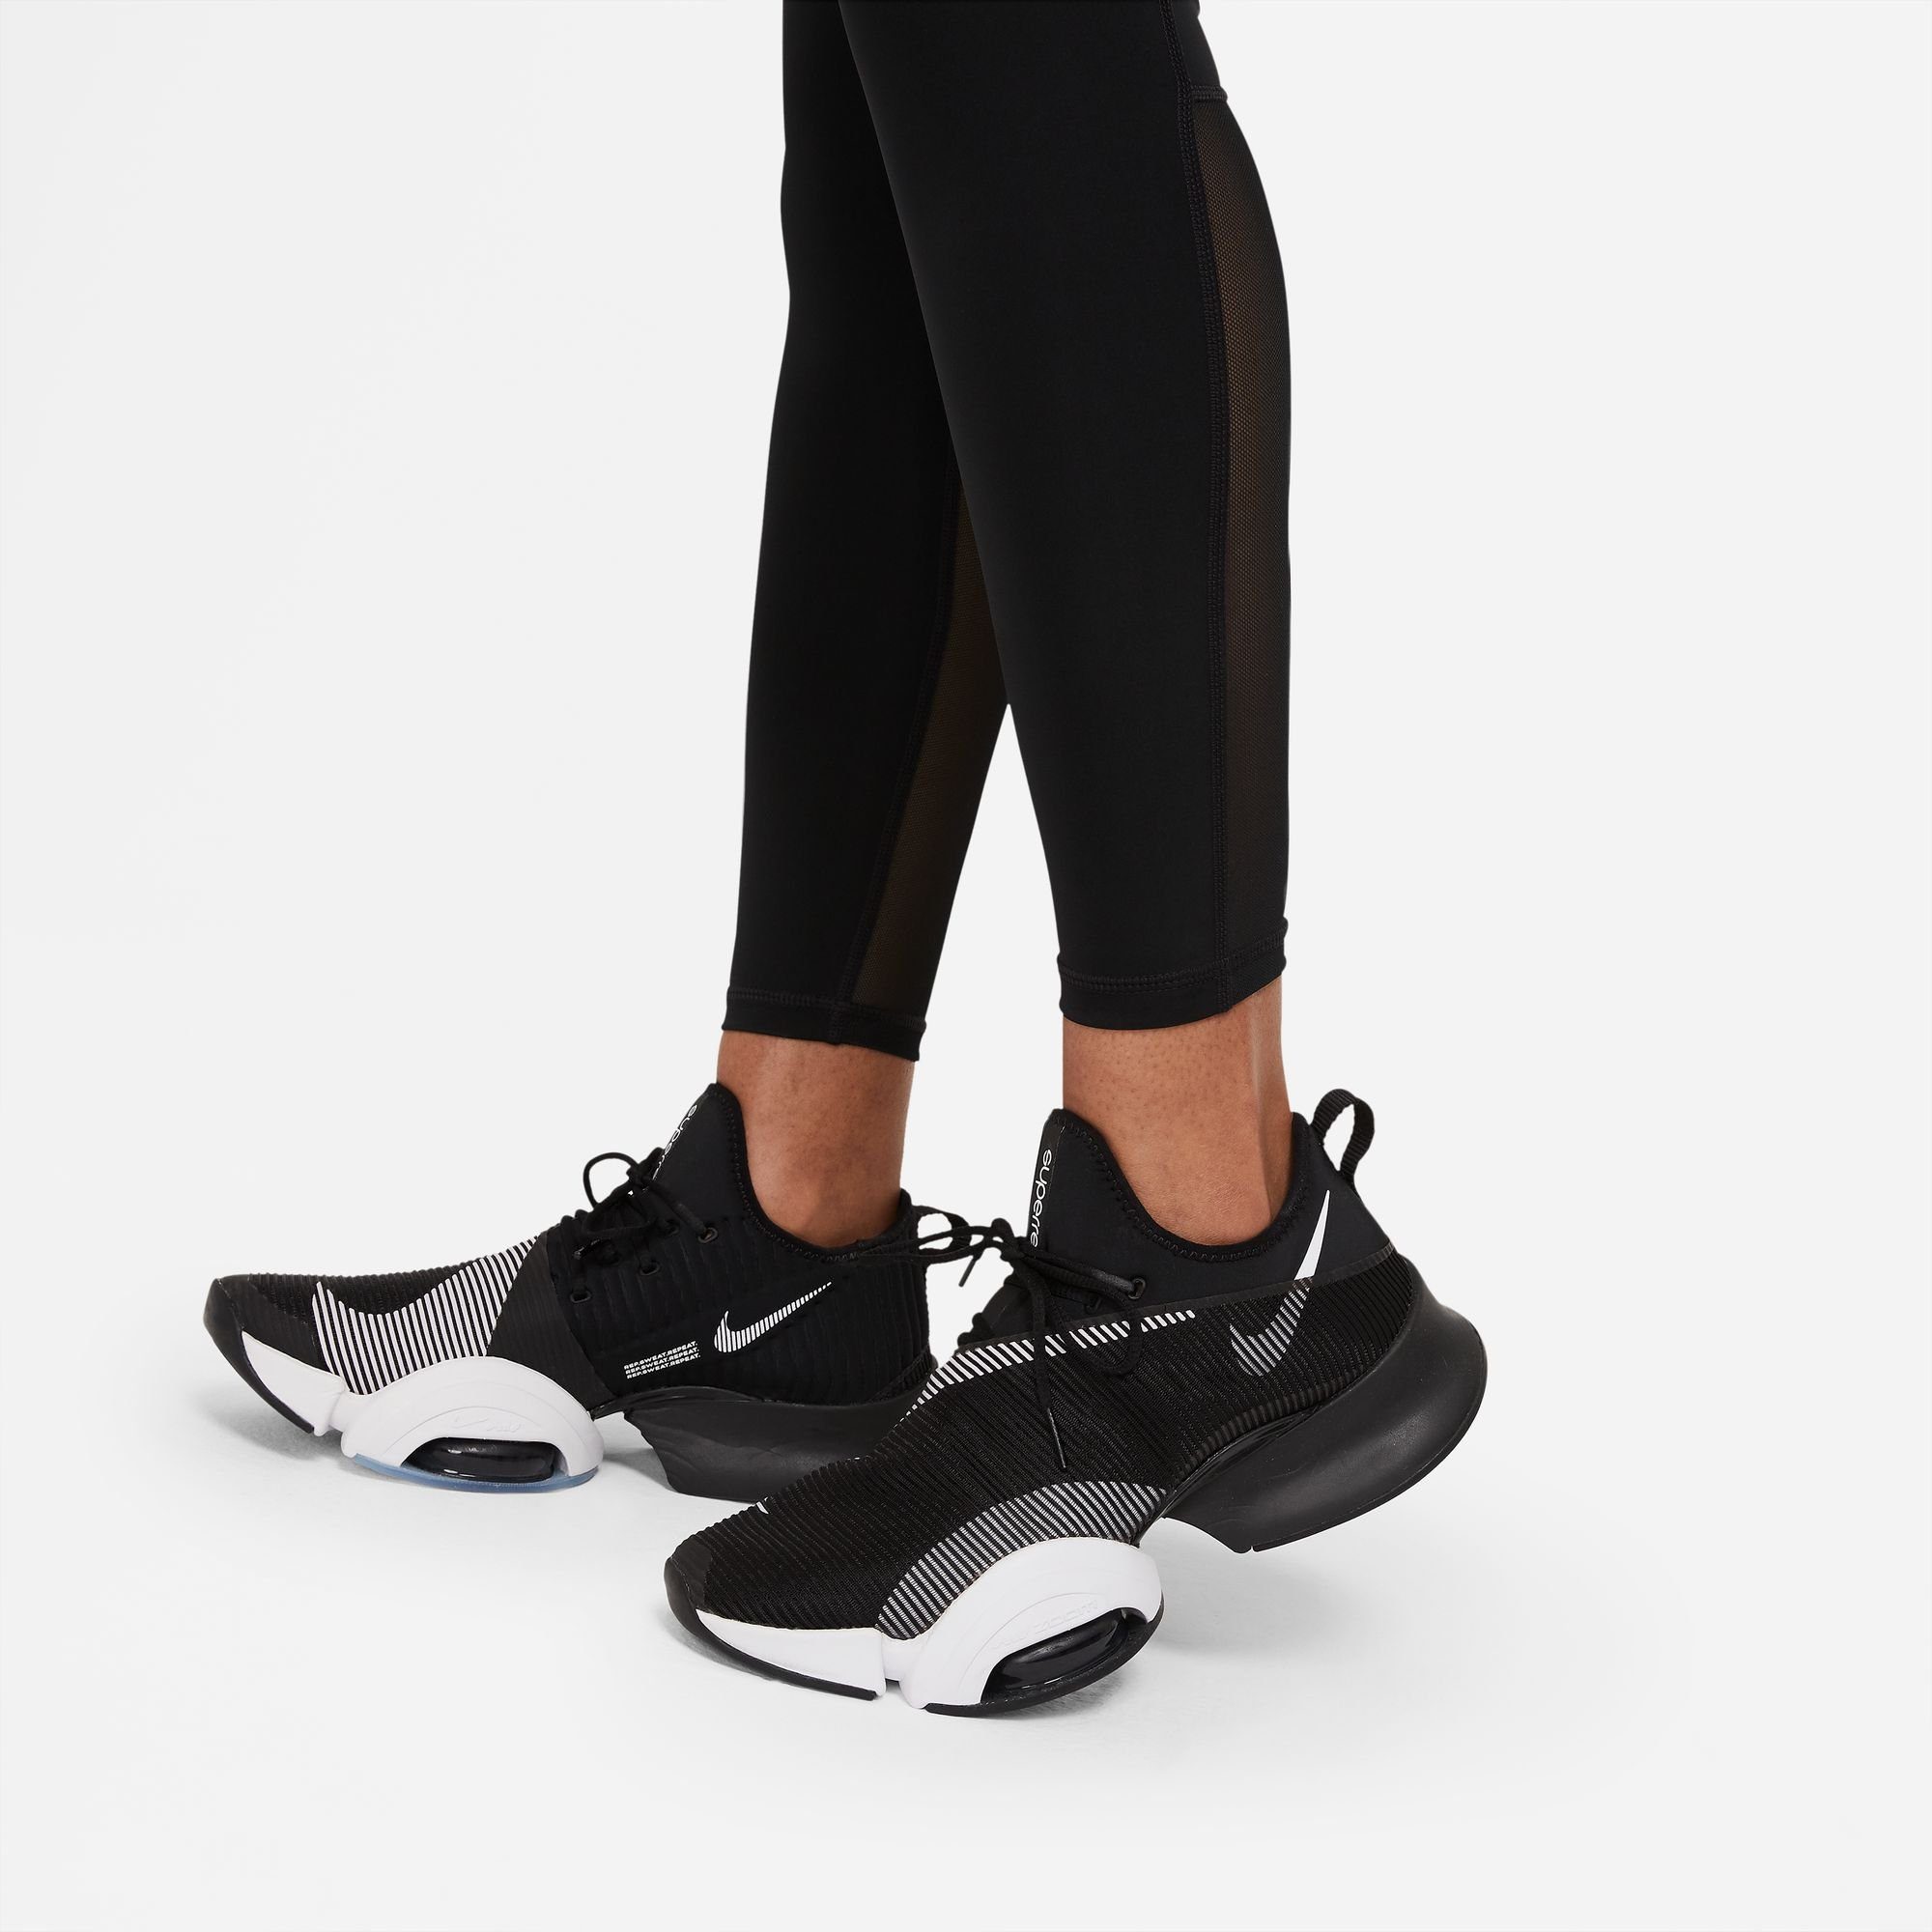 MESH-PANELED schwarz LEGGINGS PRO Trainingstights WOMEN'S Nike MID-RISE